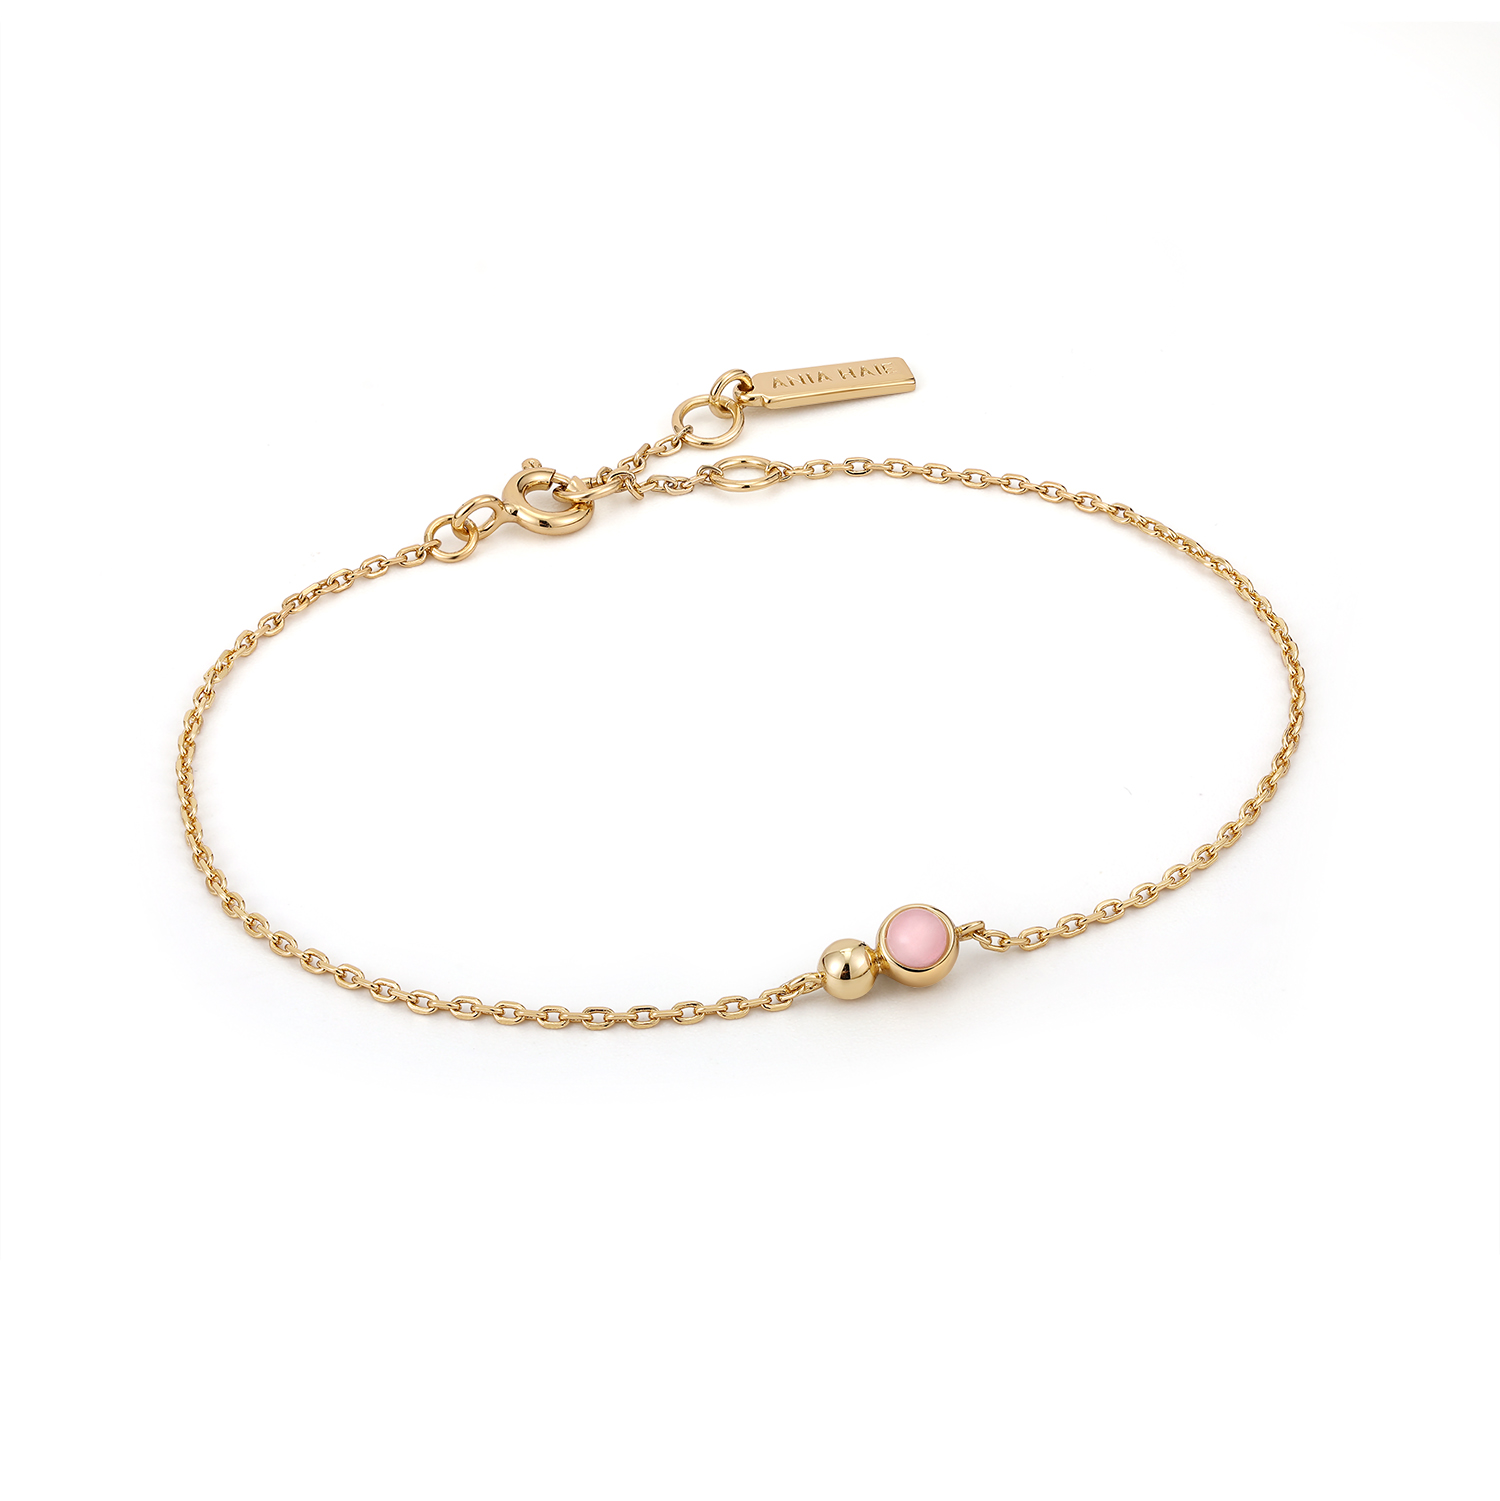 ANIA HAIE Orb Rose Quartz Chain Bracelet, Gold-plate